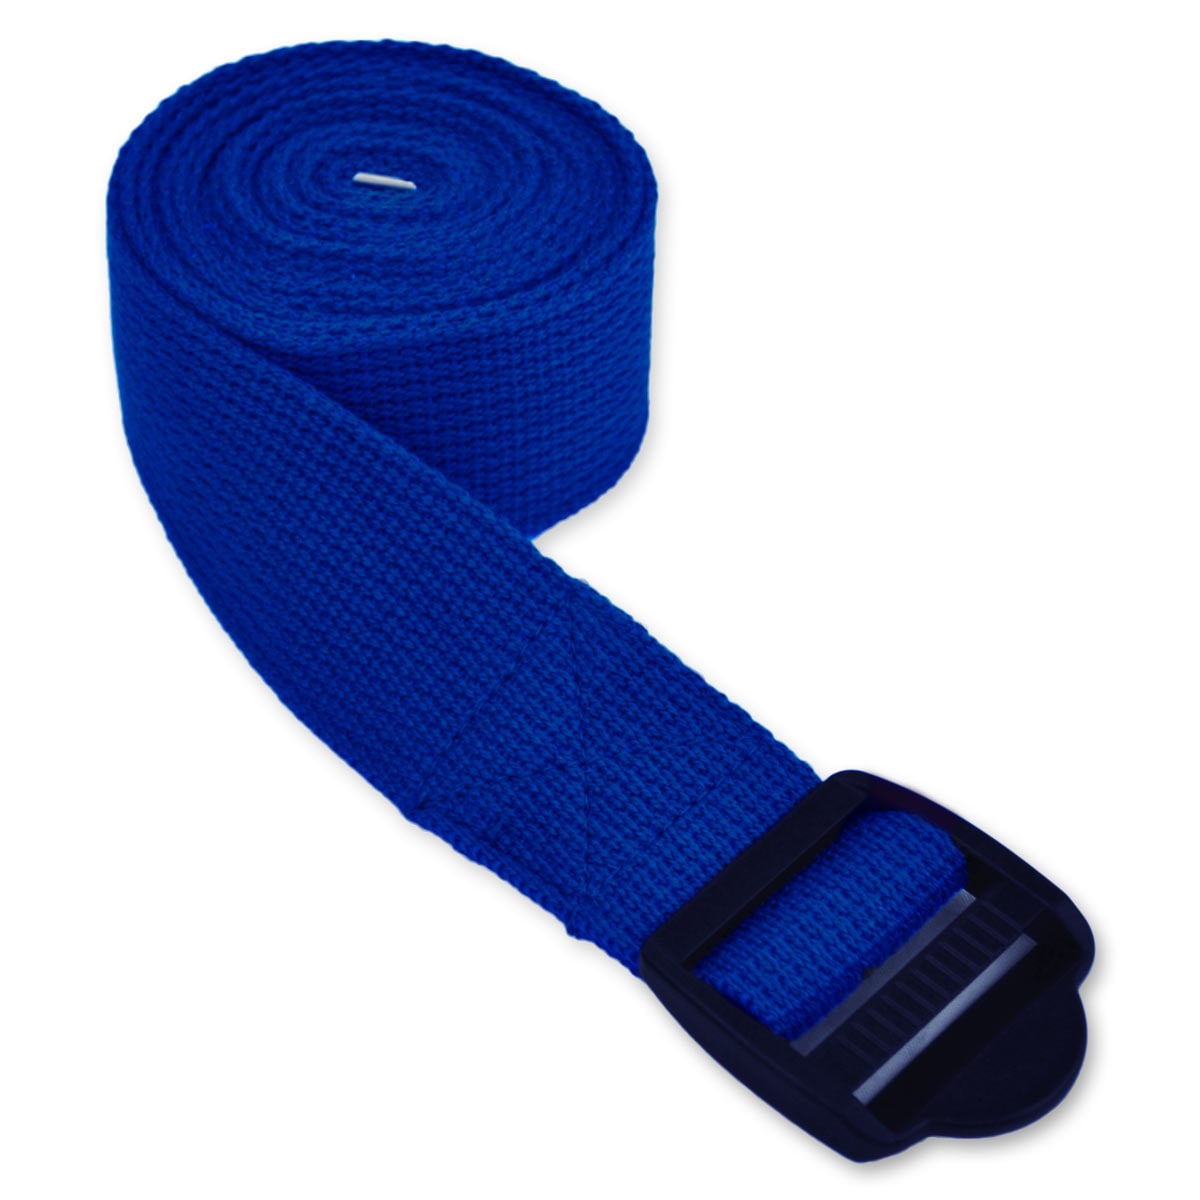 Ocean Blue Adjustable Tension Stretching Strap Belt For Gymnastics And Yoga